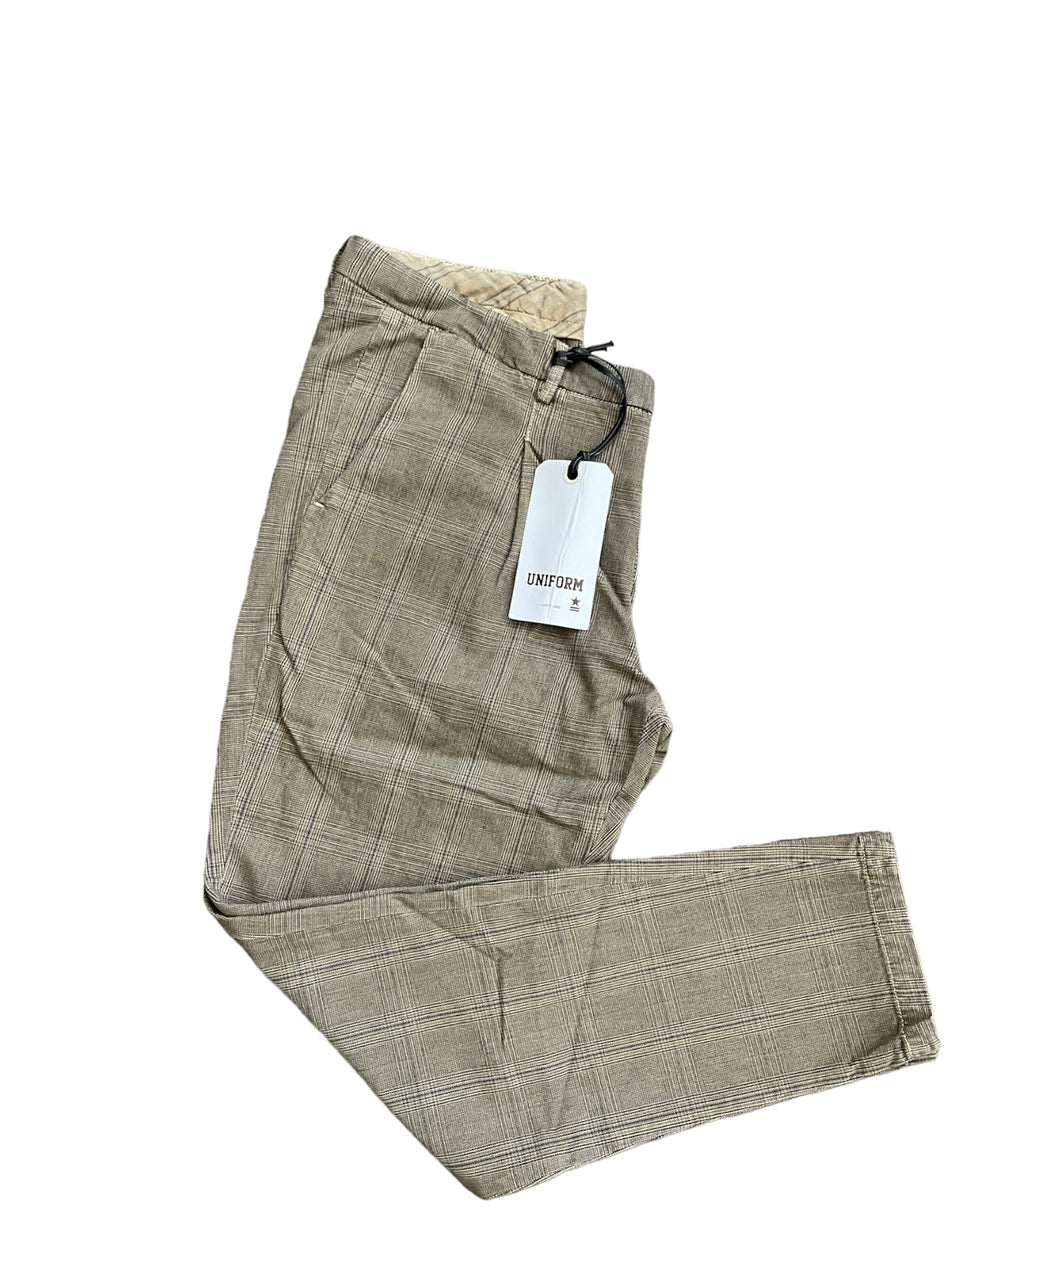 Pantalone Uomo Uniform Sc-60% Modello Taylor colore Beige chinos 7-UM0185.202.XC.044